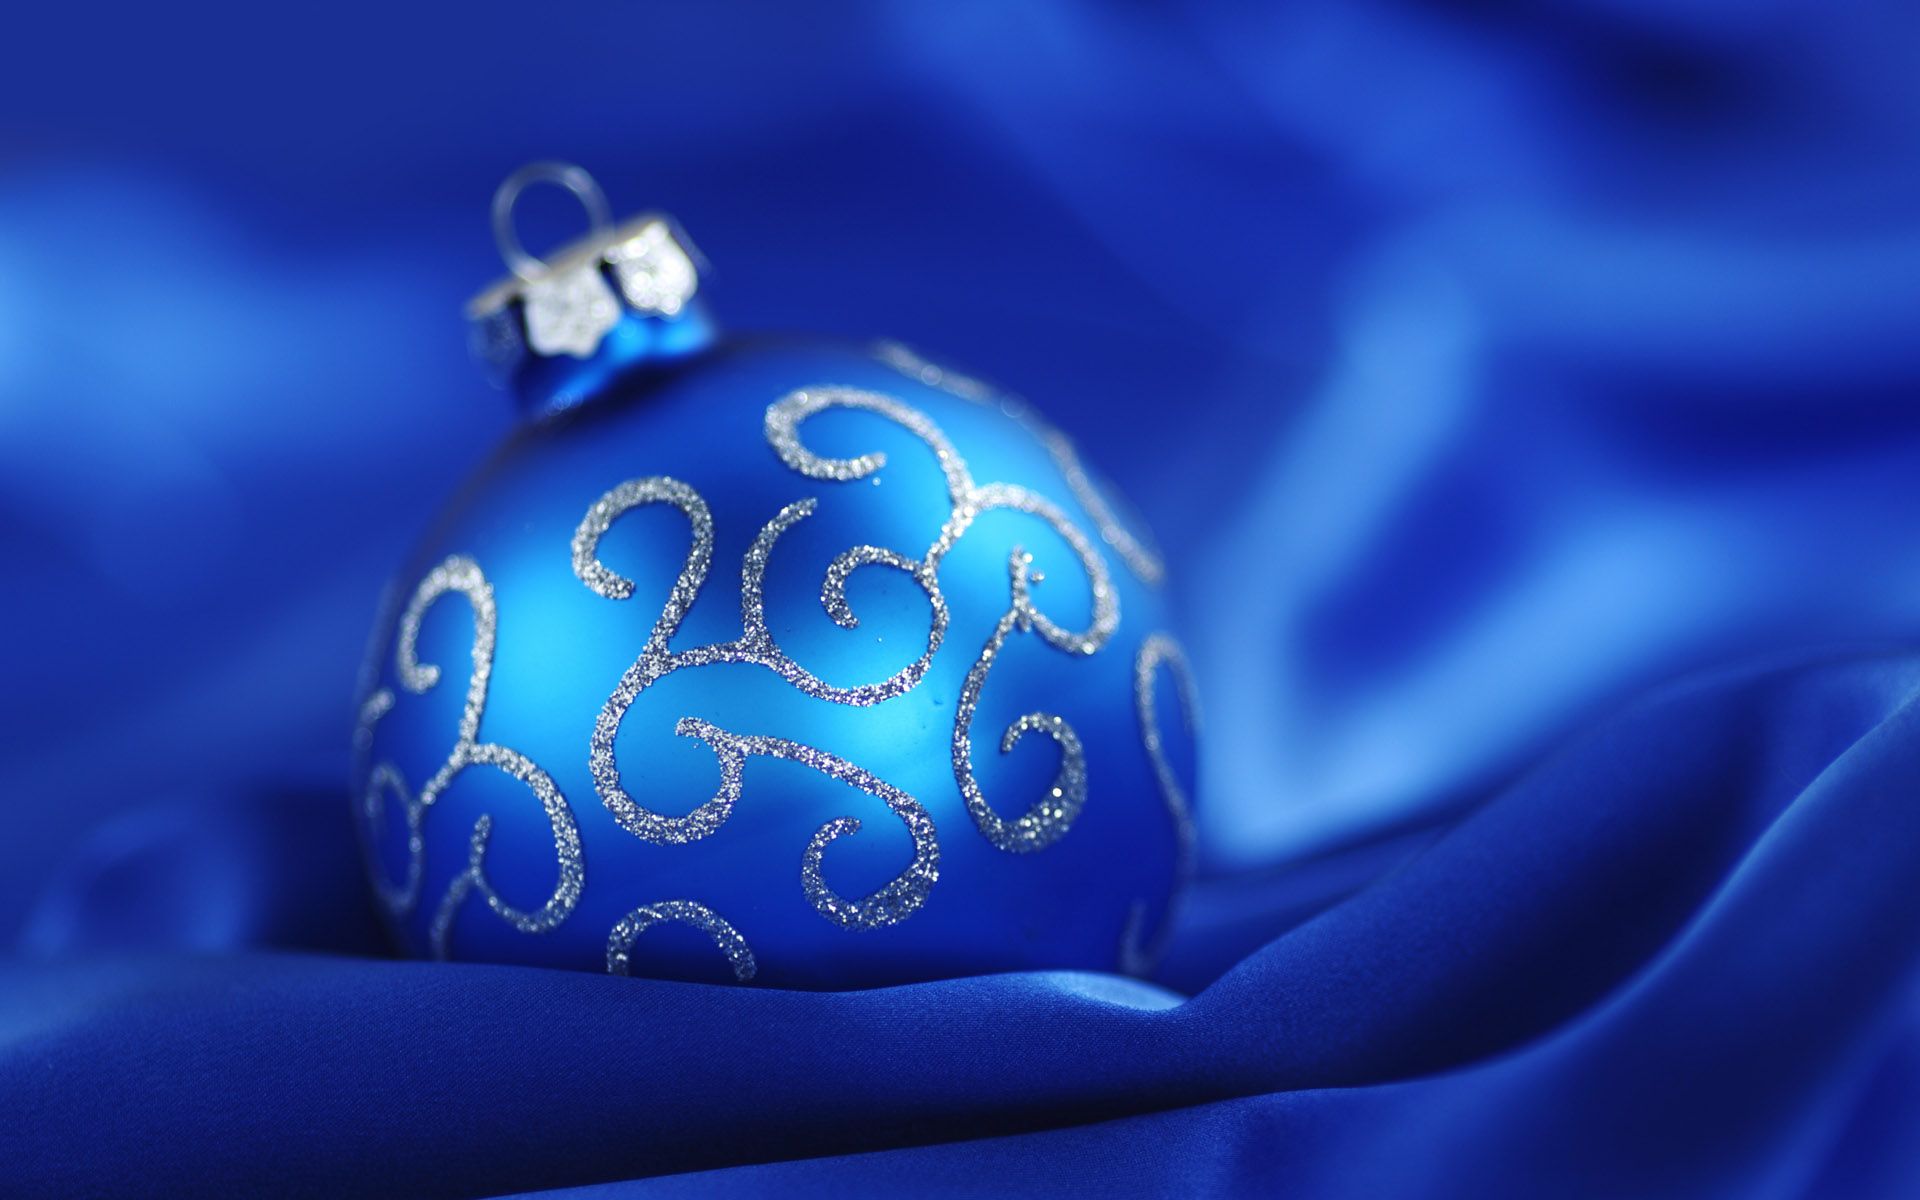 Blue Christmas Wallpaper HD. Blue christmas, Christmas balls, Christmas wallpaper hd